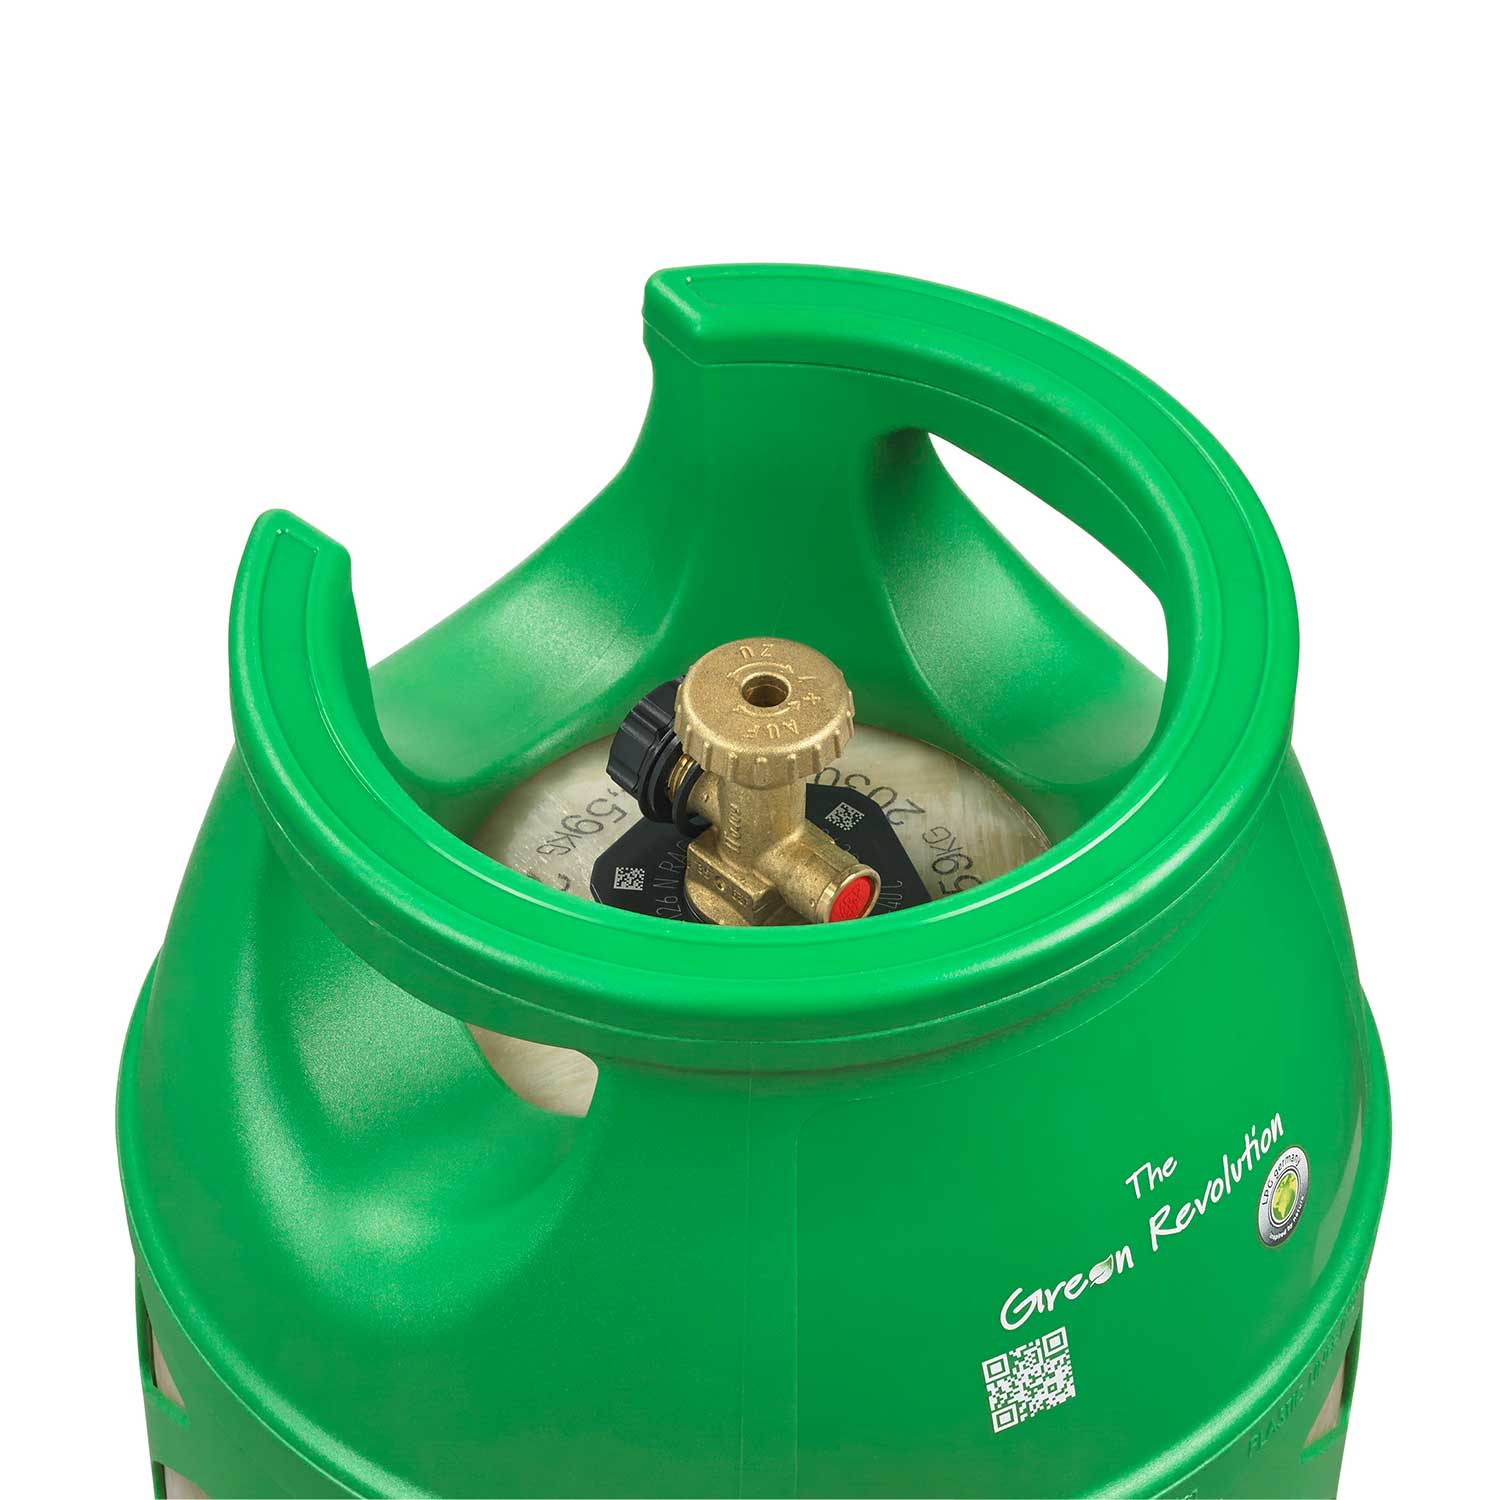 Composite Gasflasche “The Green Revolution” 7,5 kg Deutsches Standardventil  (2020) – CombiFuel Germany GmbH